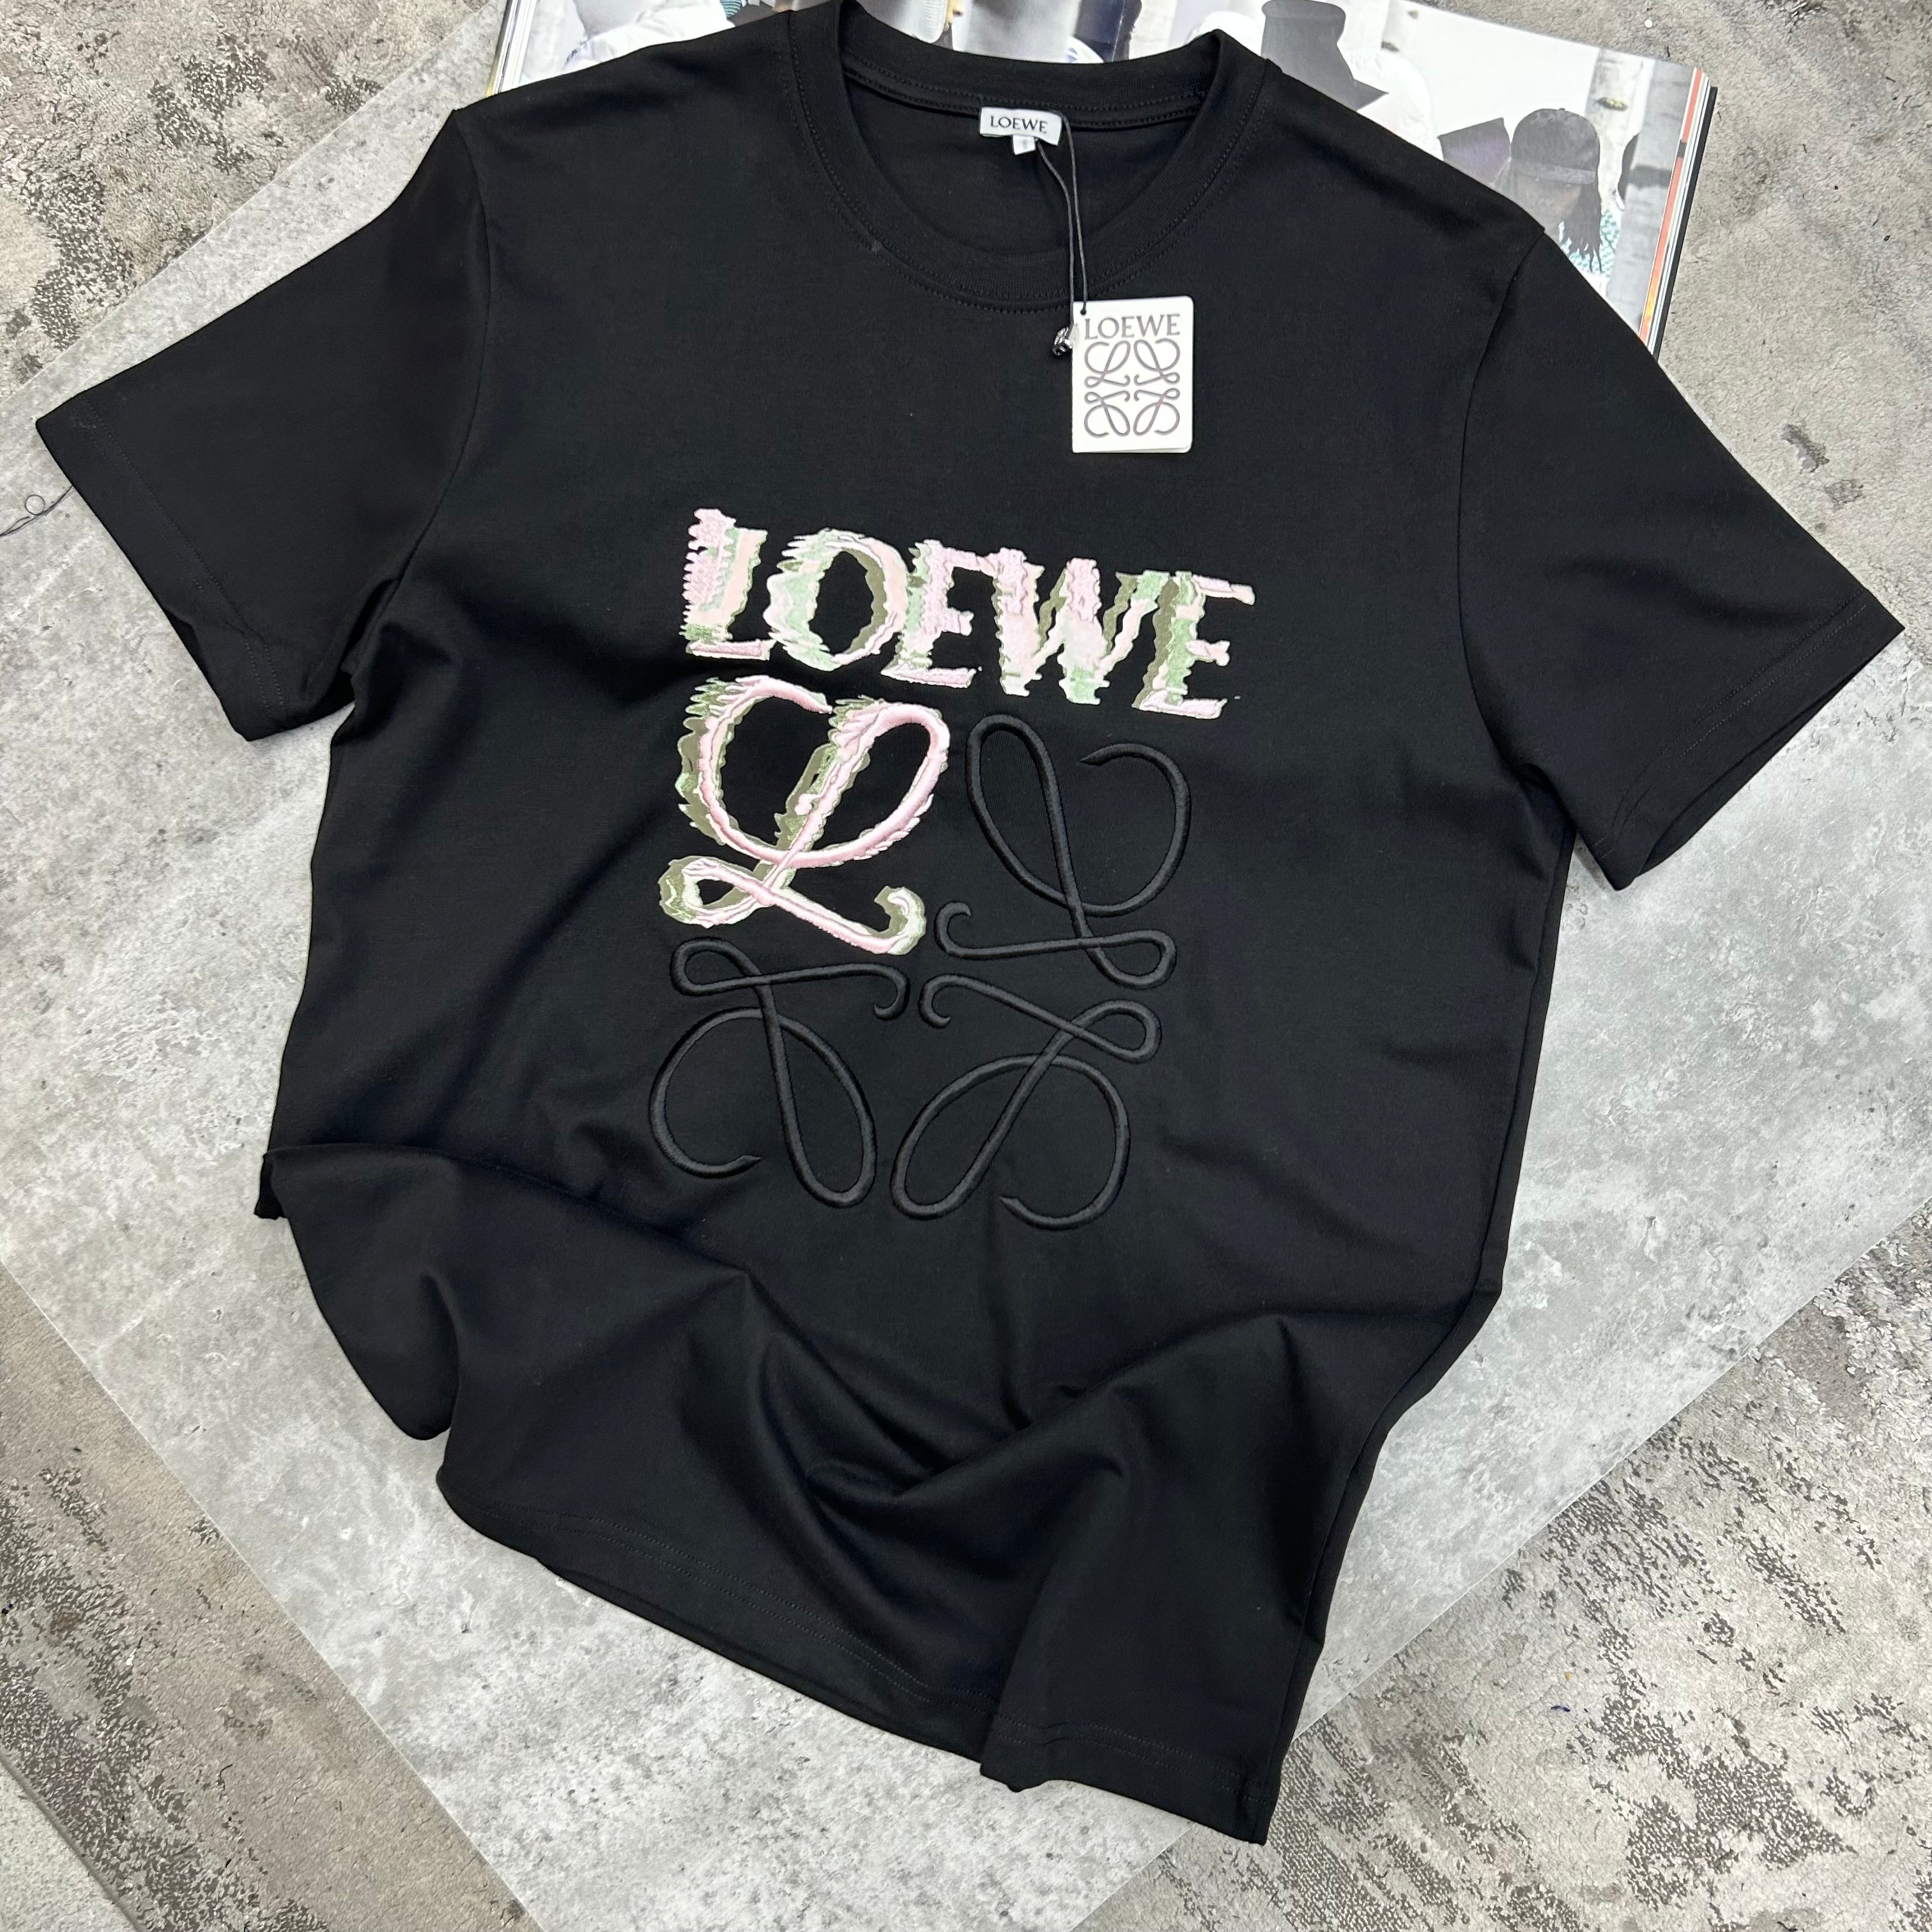 LOEWE -T-SHIRT - BLACK